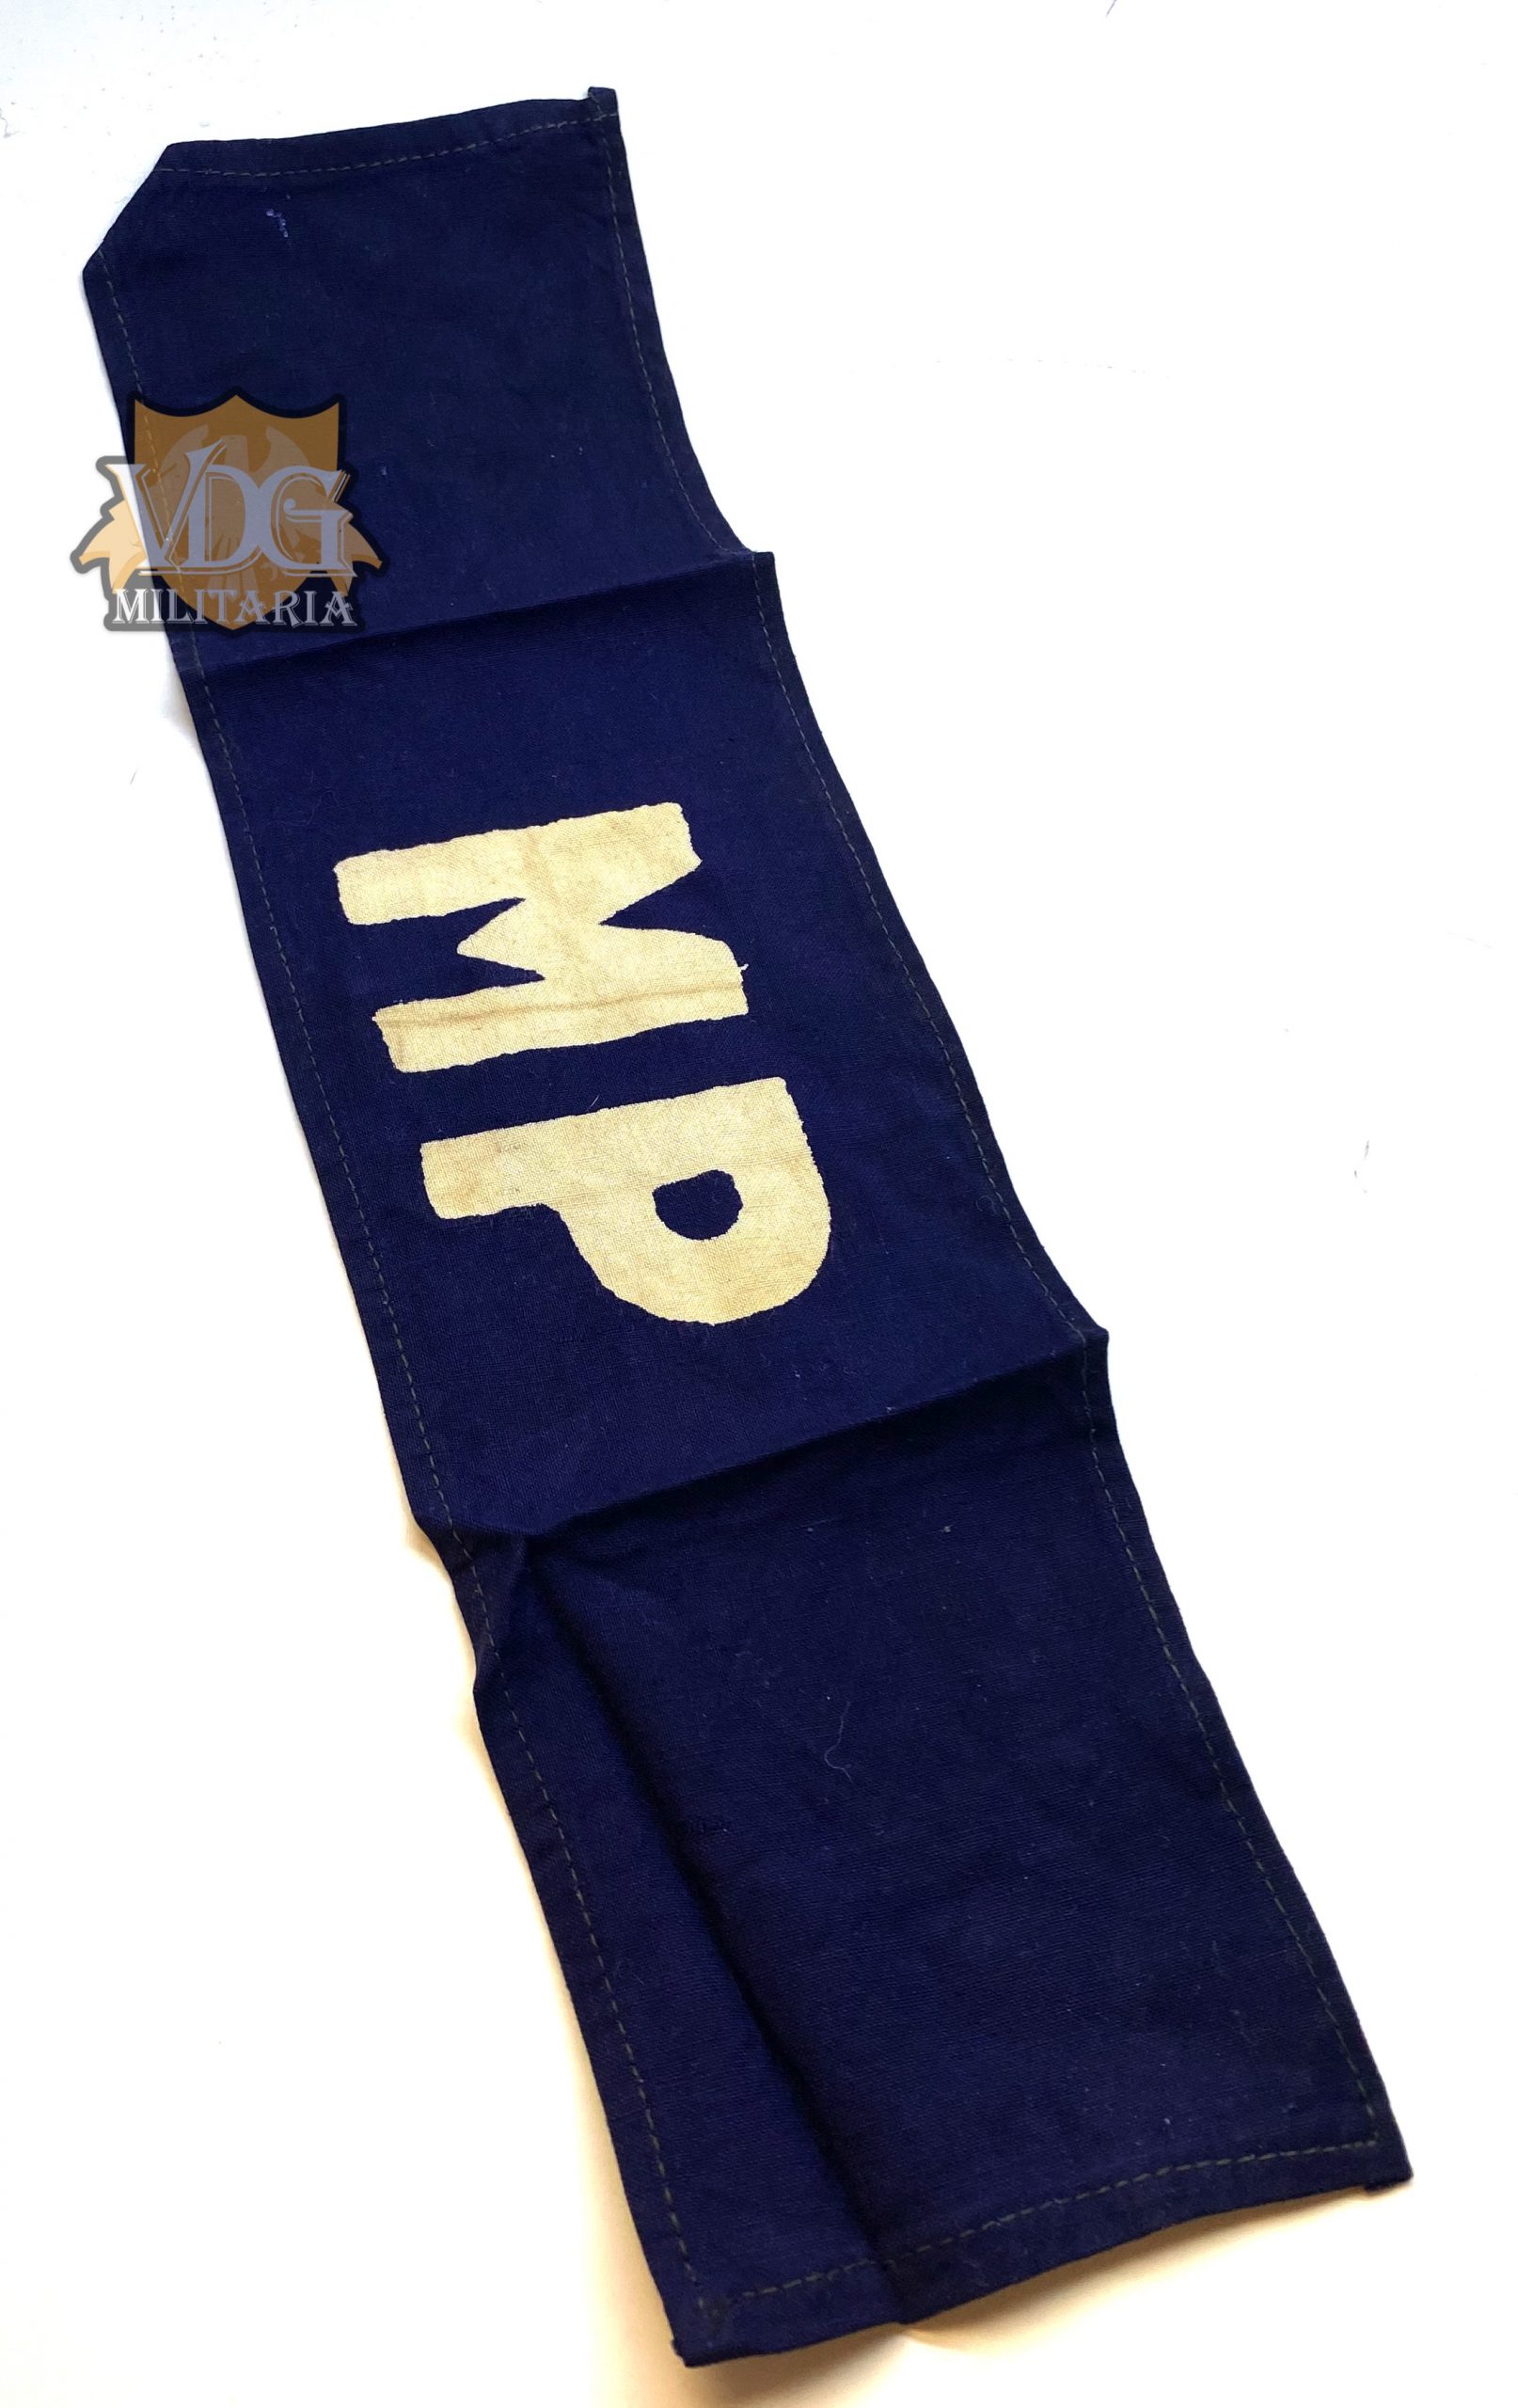 | US VDG Printed MP Armband Military Militaria WW2 Police Army